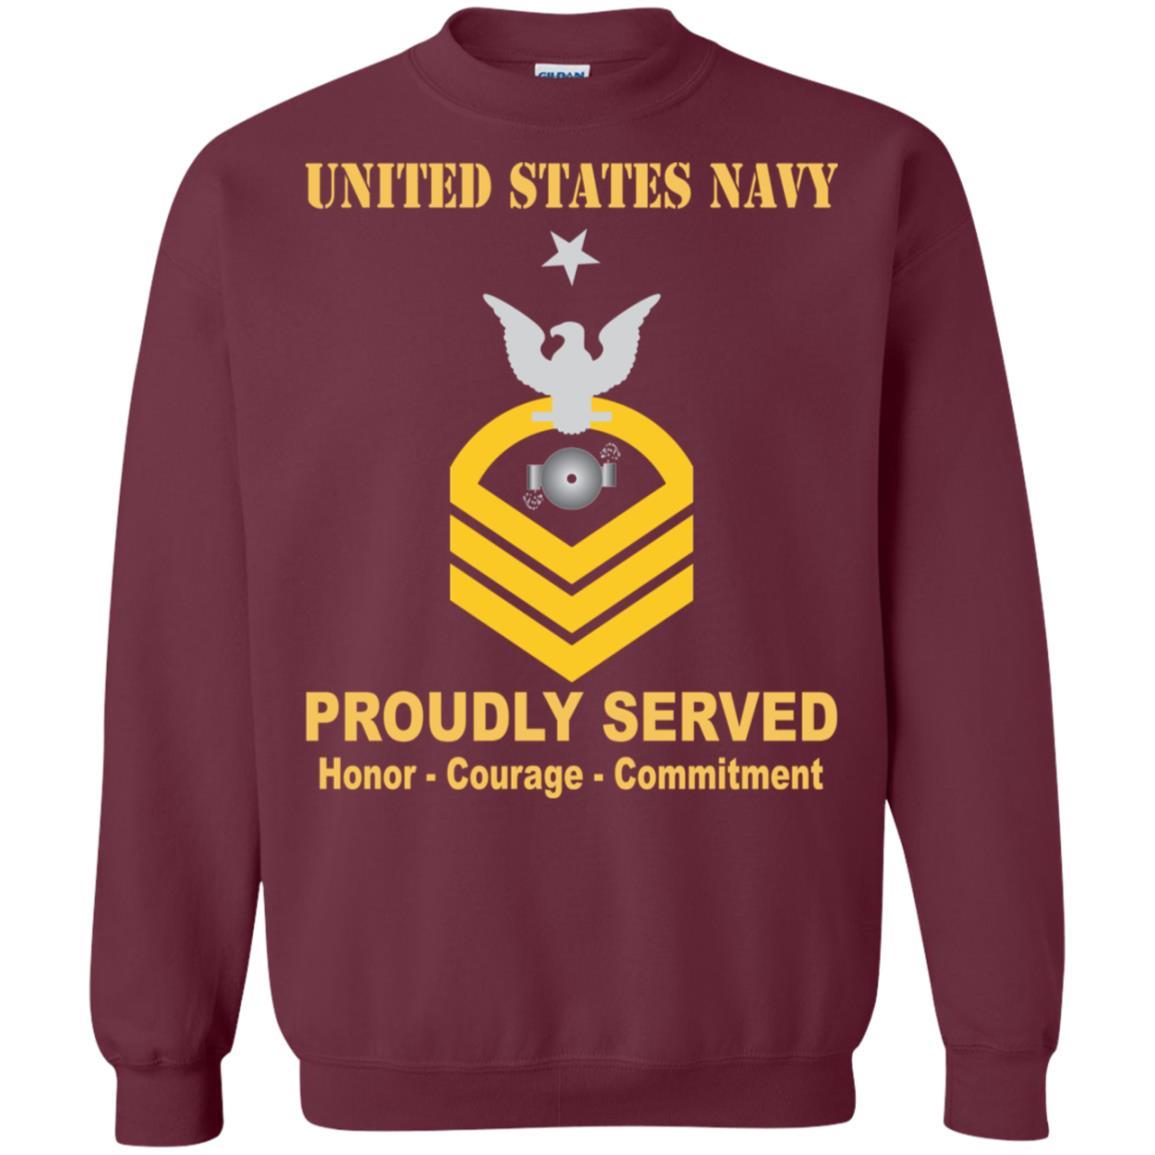 U.S Navy Boiler technician Navy BT E-8 Rating Badges Proudly Served T-Shirt For Men On Front-TShirt-Navy-Veterans Nation